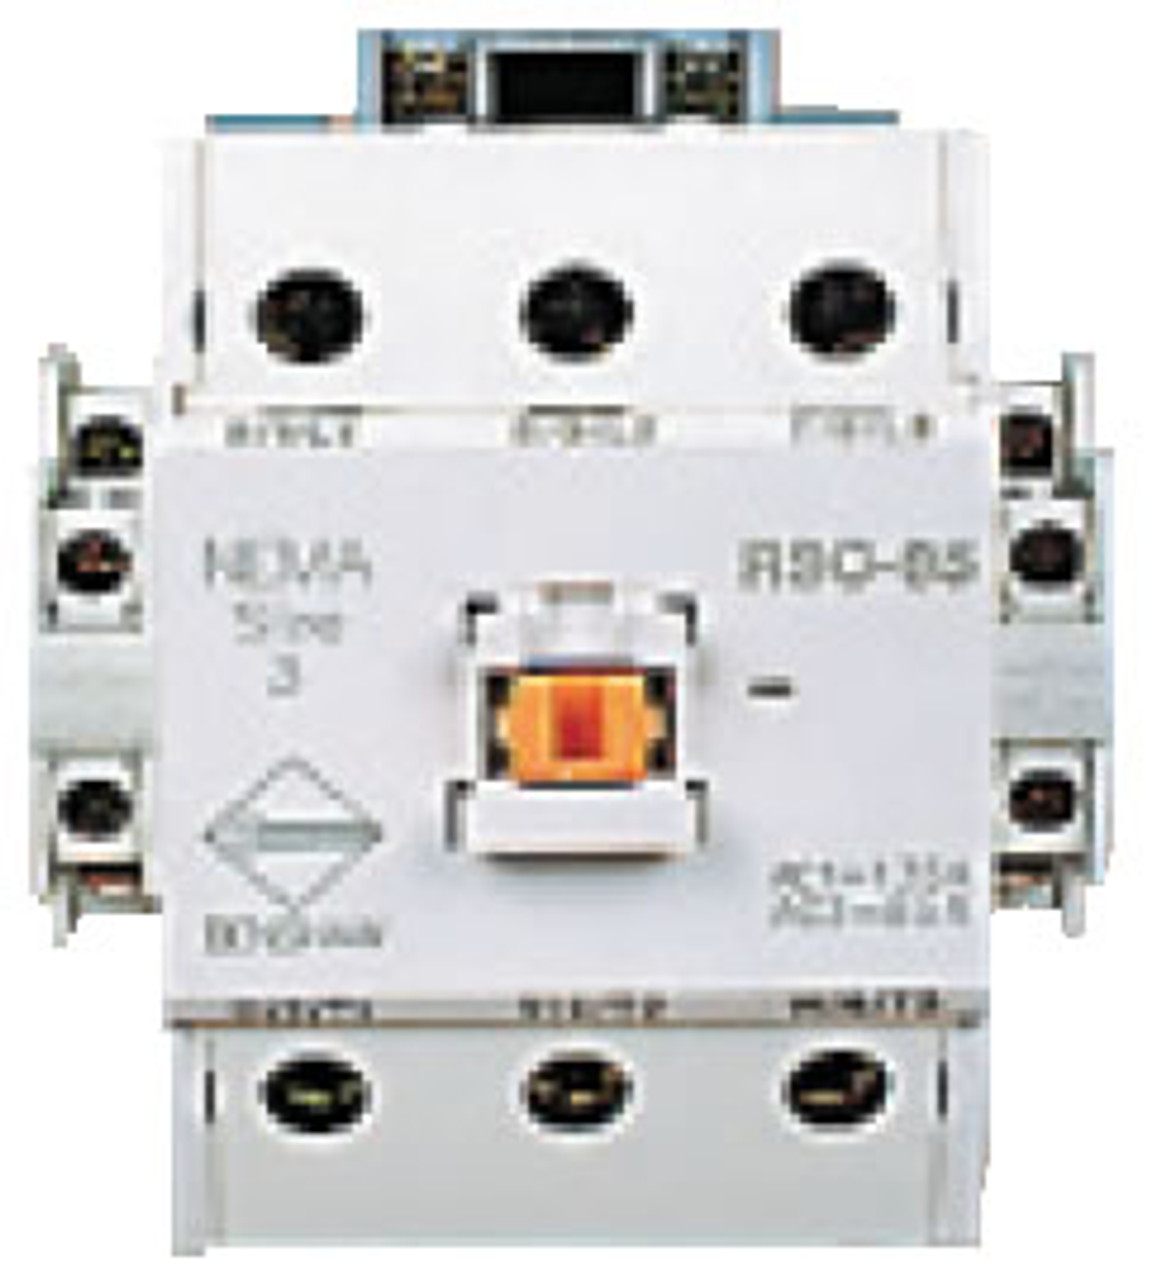 Benshaw RSC-65-6AC24 contactor